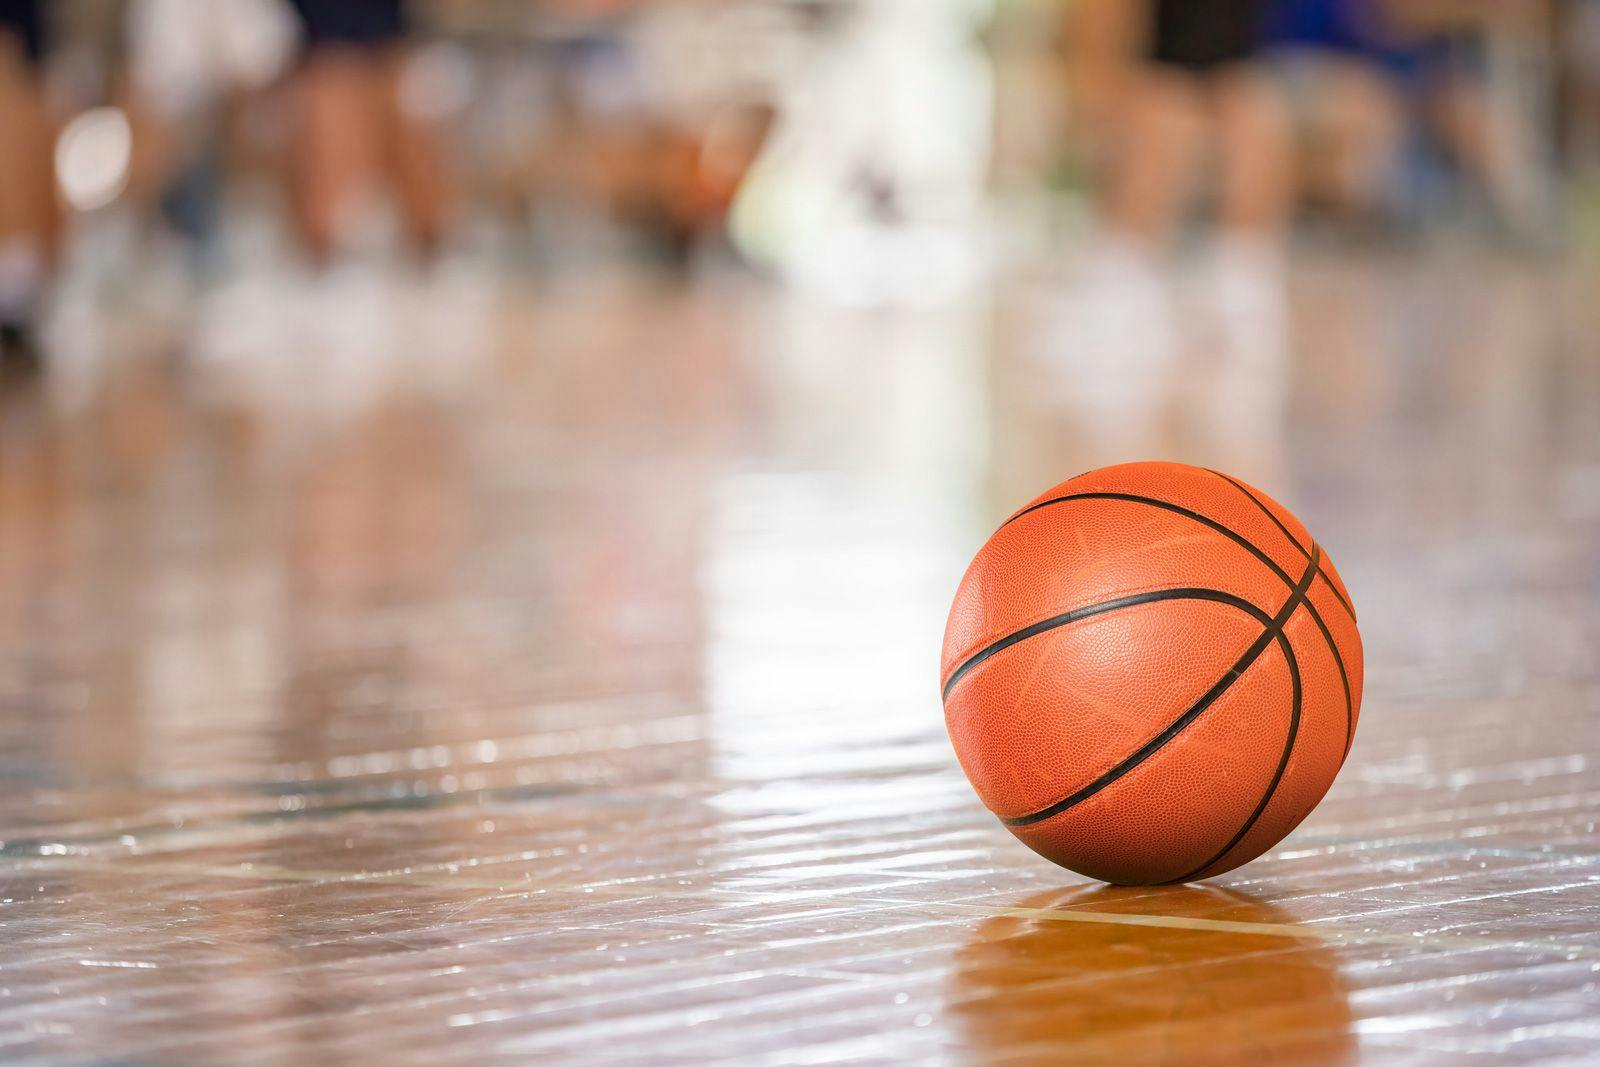 A basketball on a wooden floor